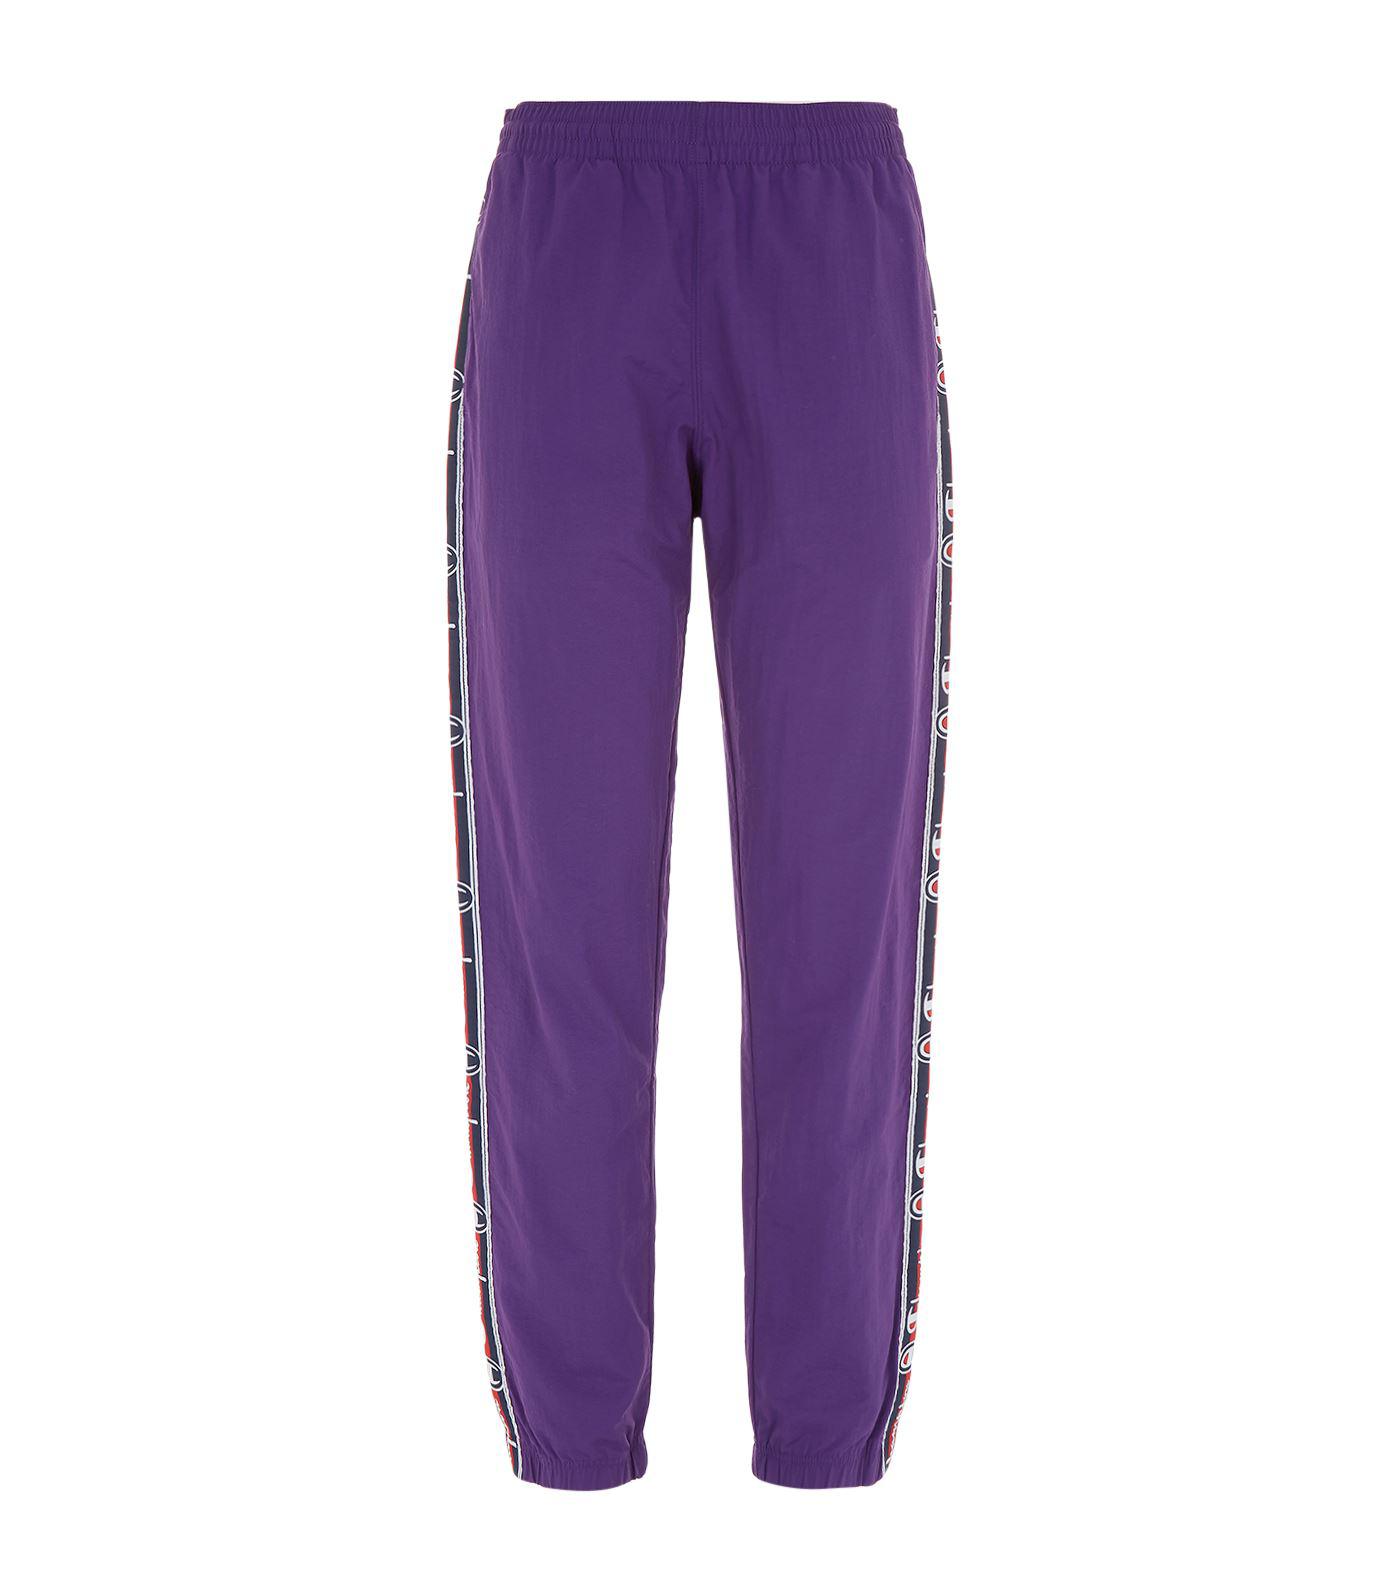 champion purple sweatpants